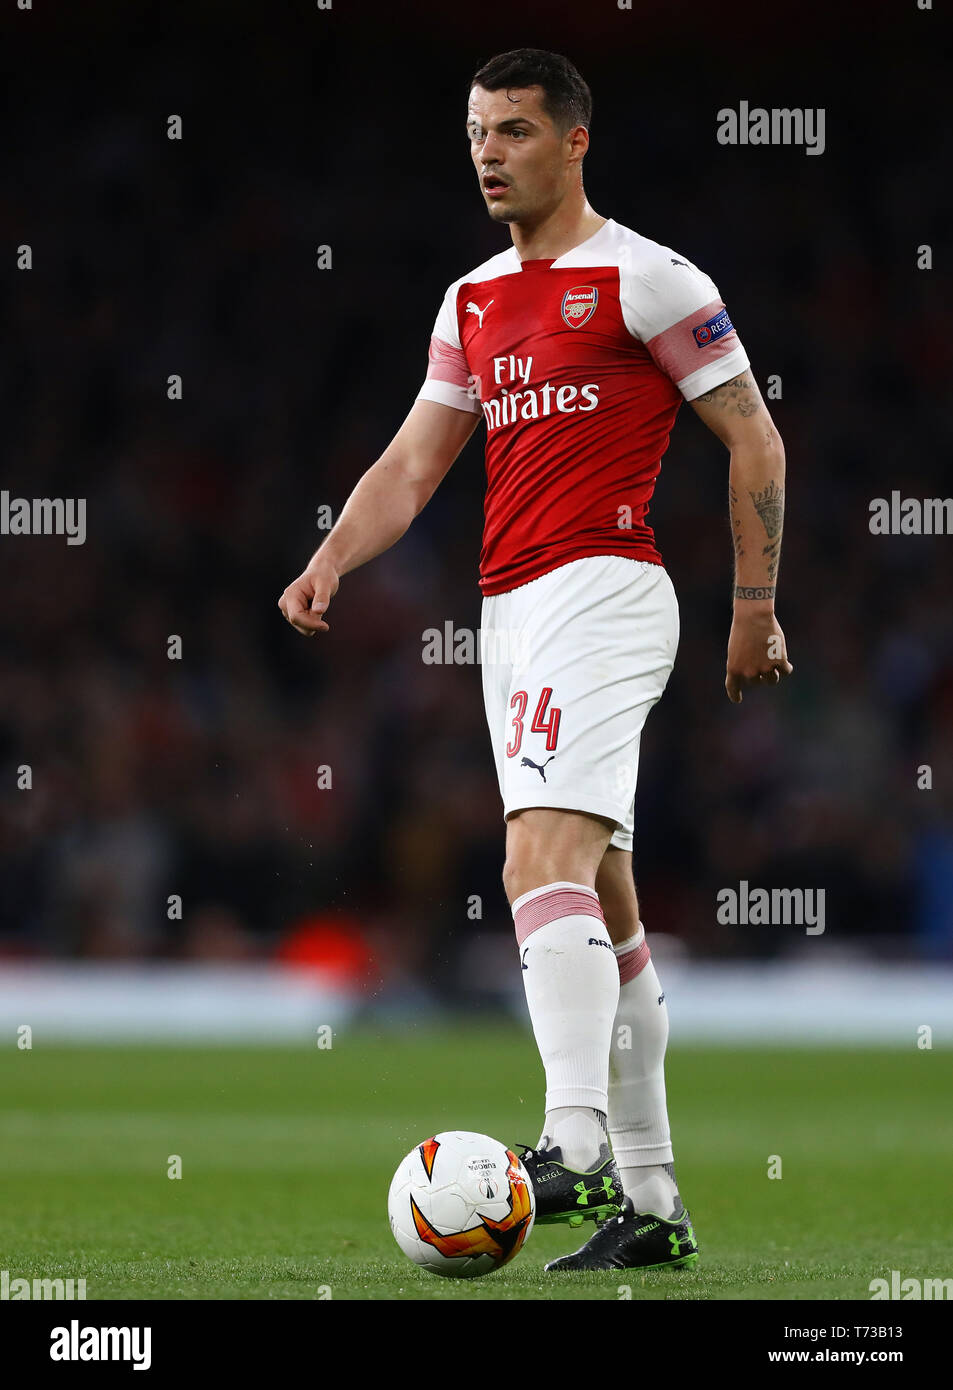 Granit Xhaka of Arsenal - Arsenal v Valencia, UEFA Europa League Semi Final - 1st Leg, Emirates Stadium, London (Holloway) - 2nd May 2019 Stock Photo